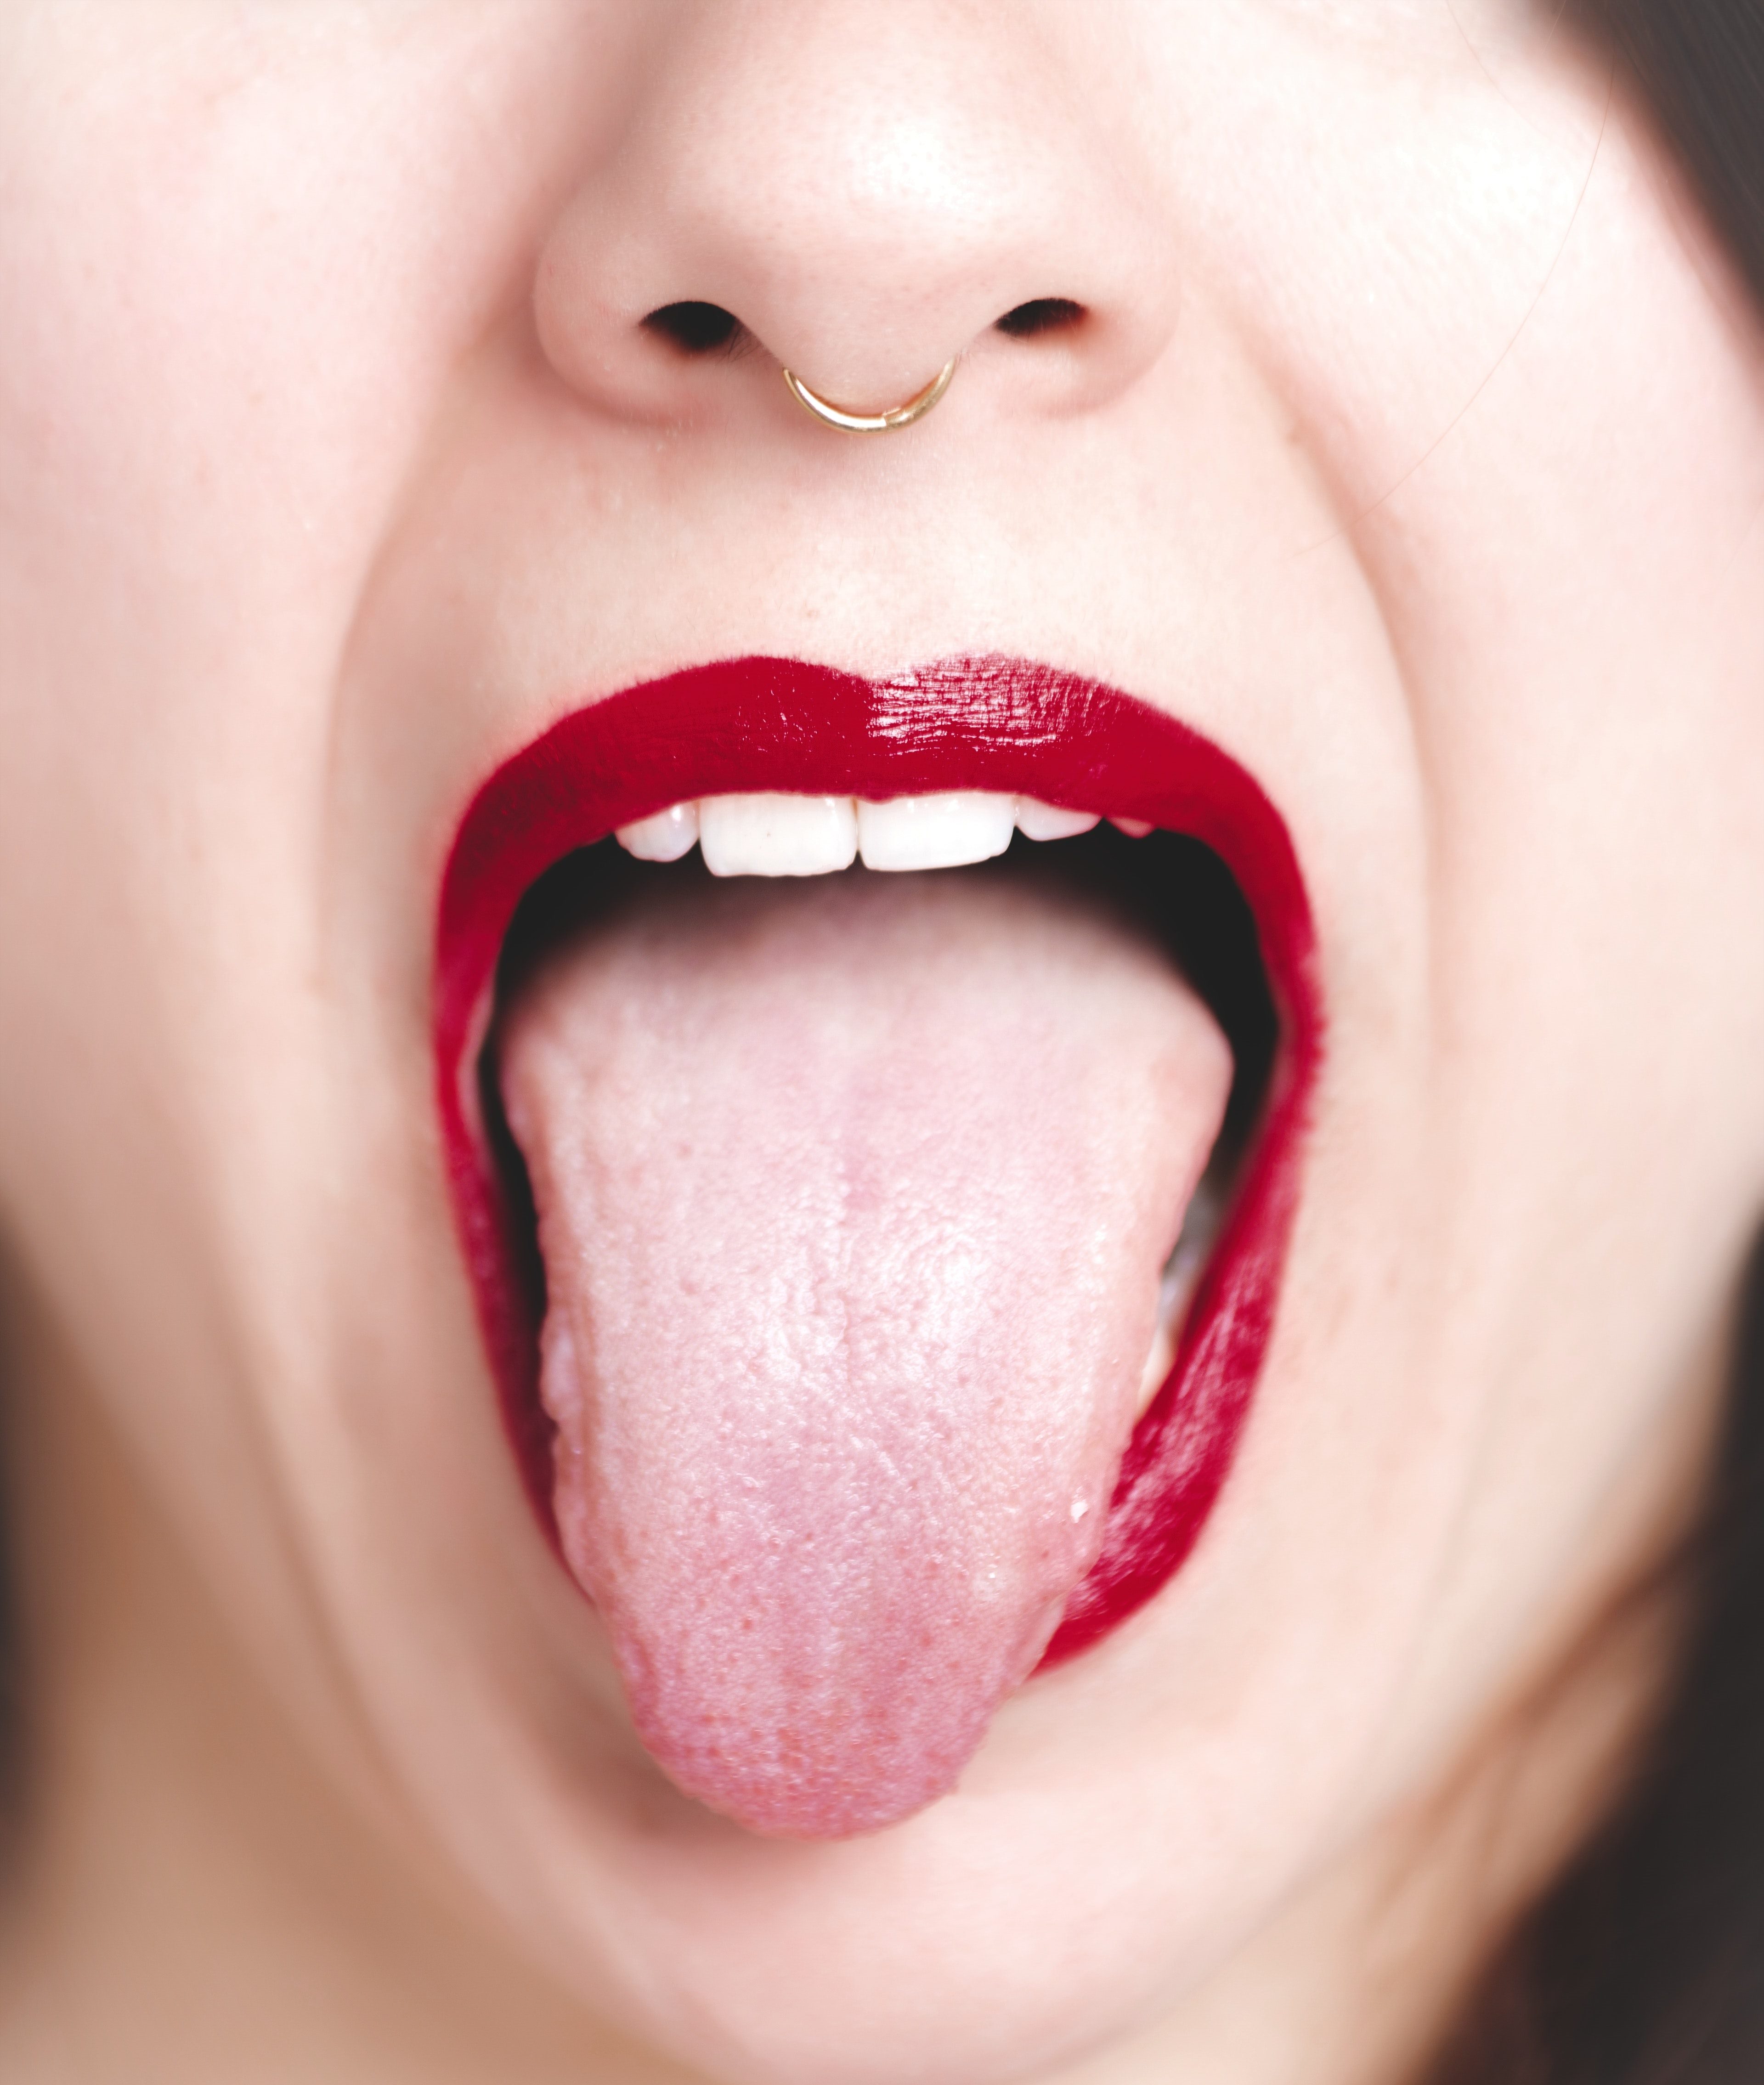 Bulbar Onset ALS vs. Normal Tongue Twitching